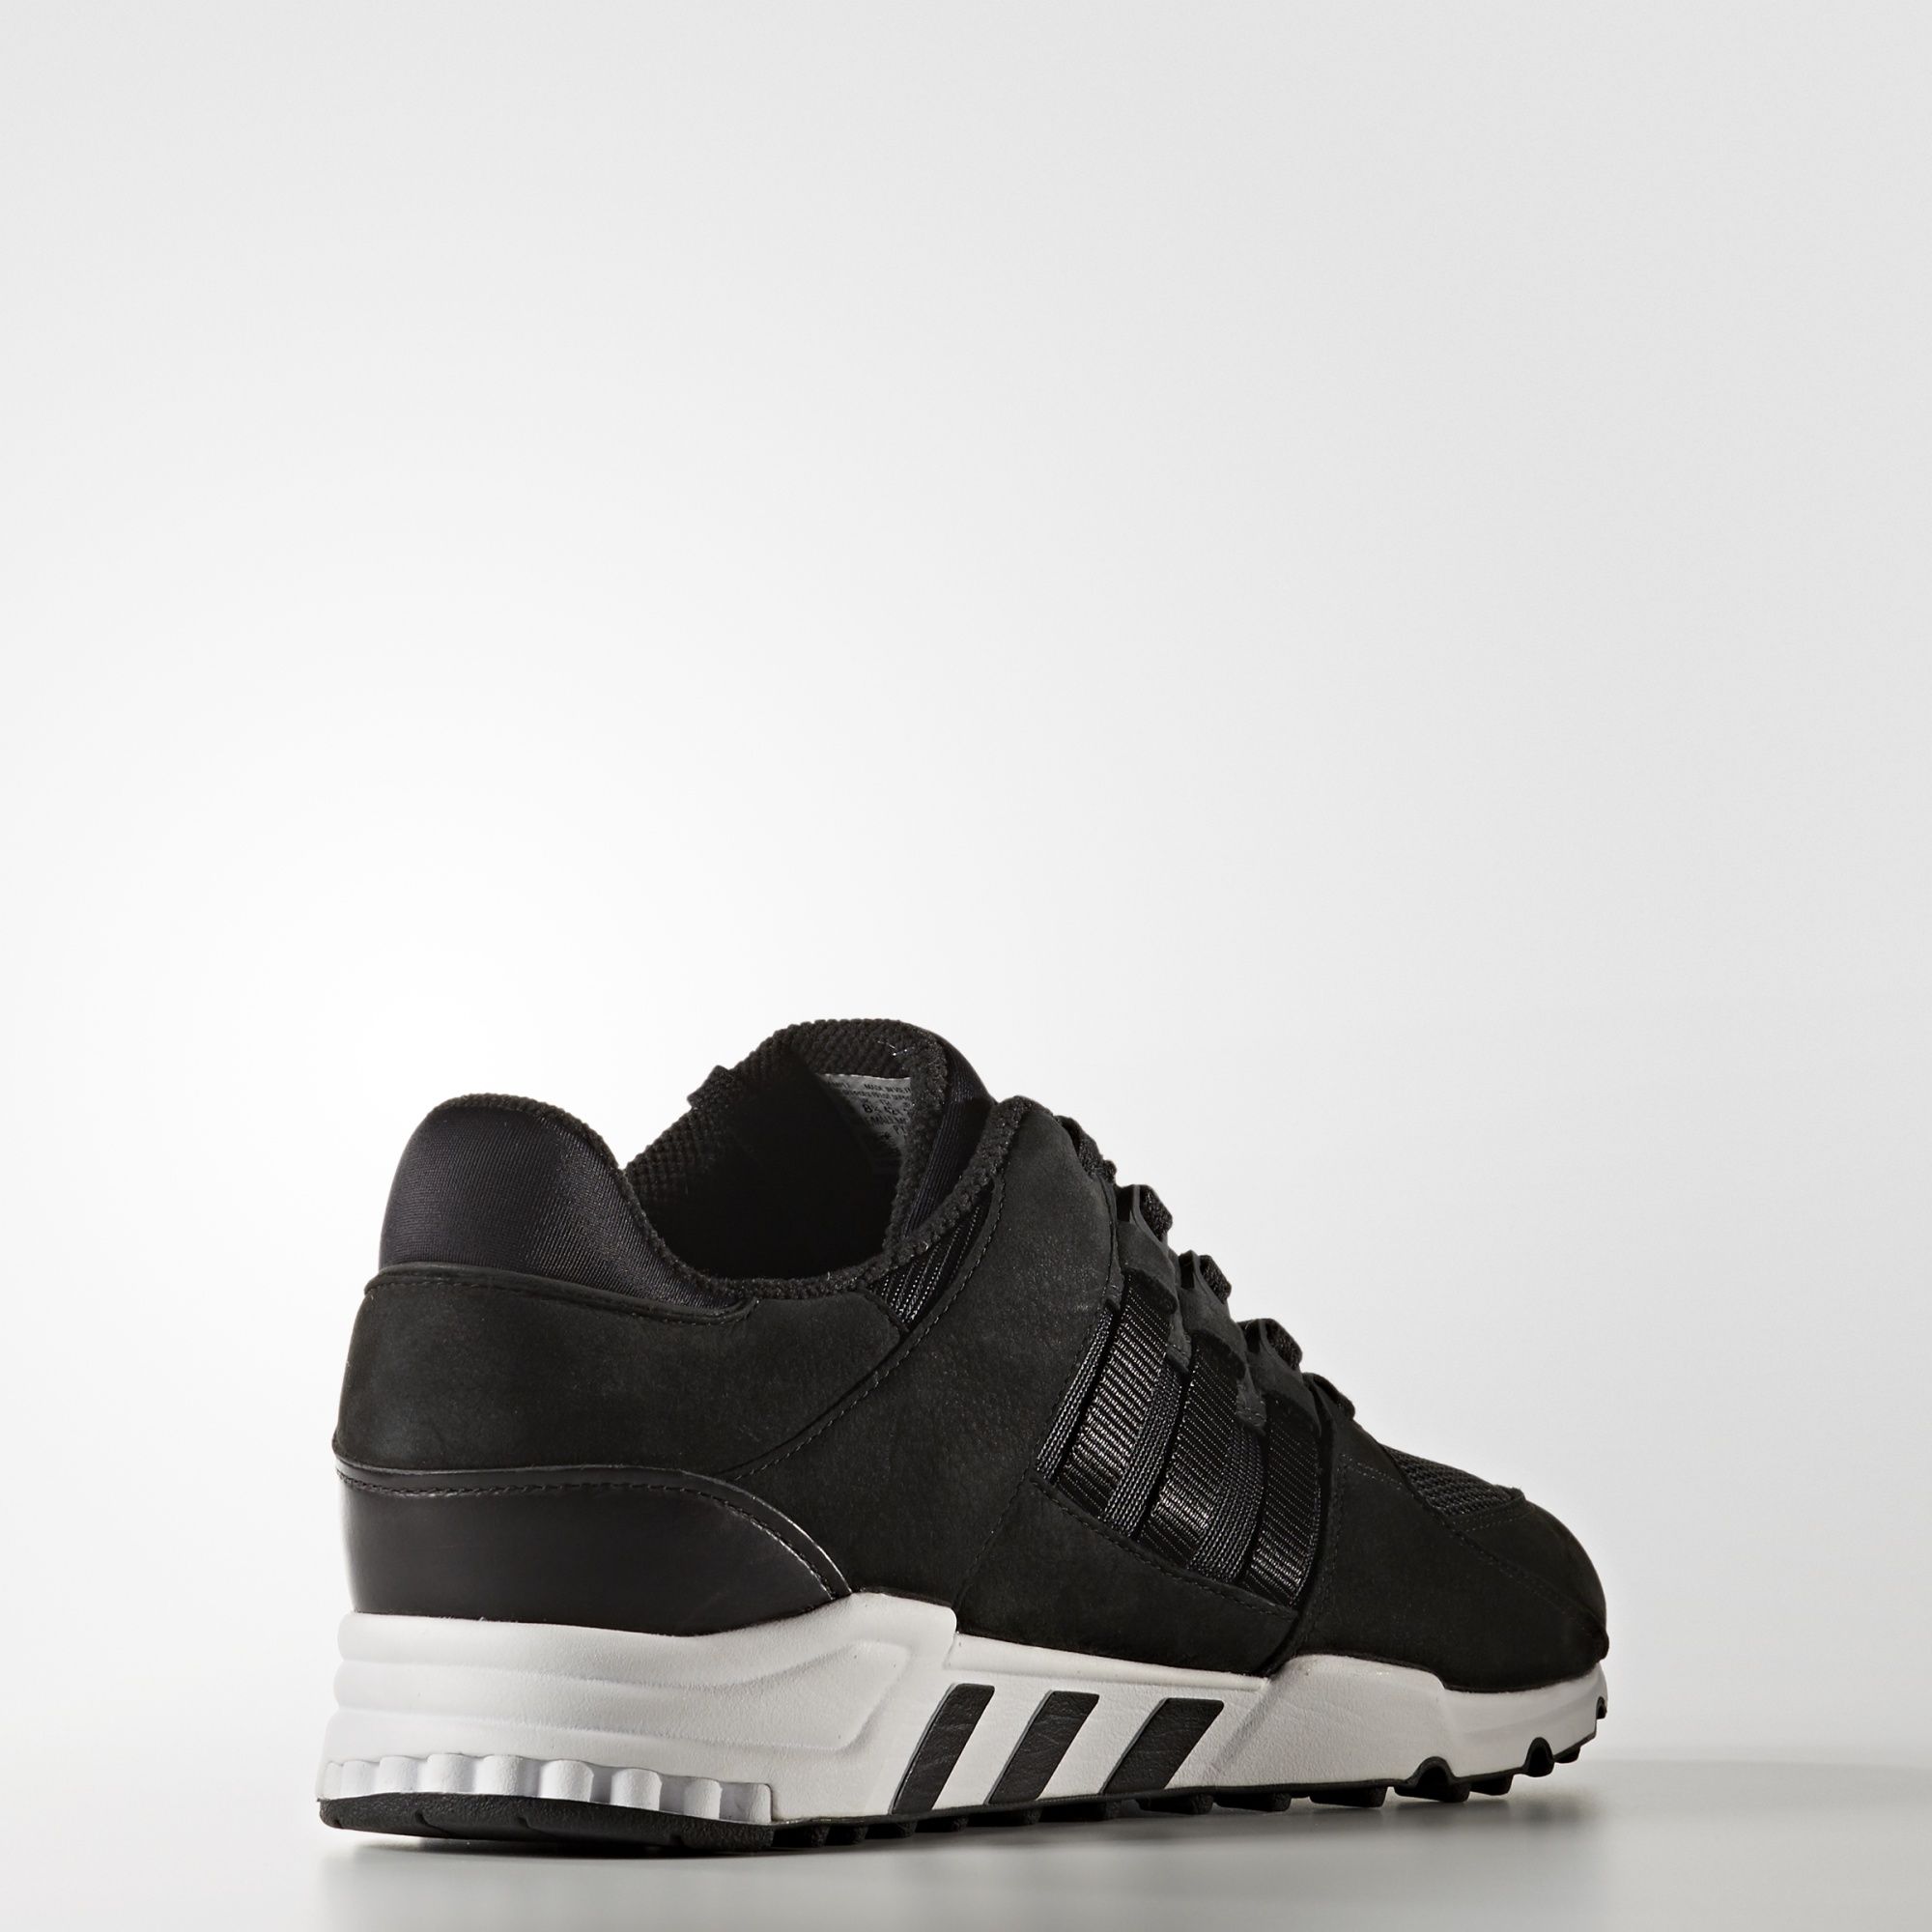 Adidas EQT Support RF
Core Black / Footwear White